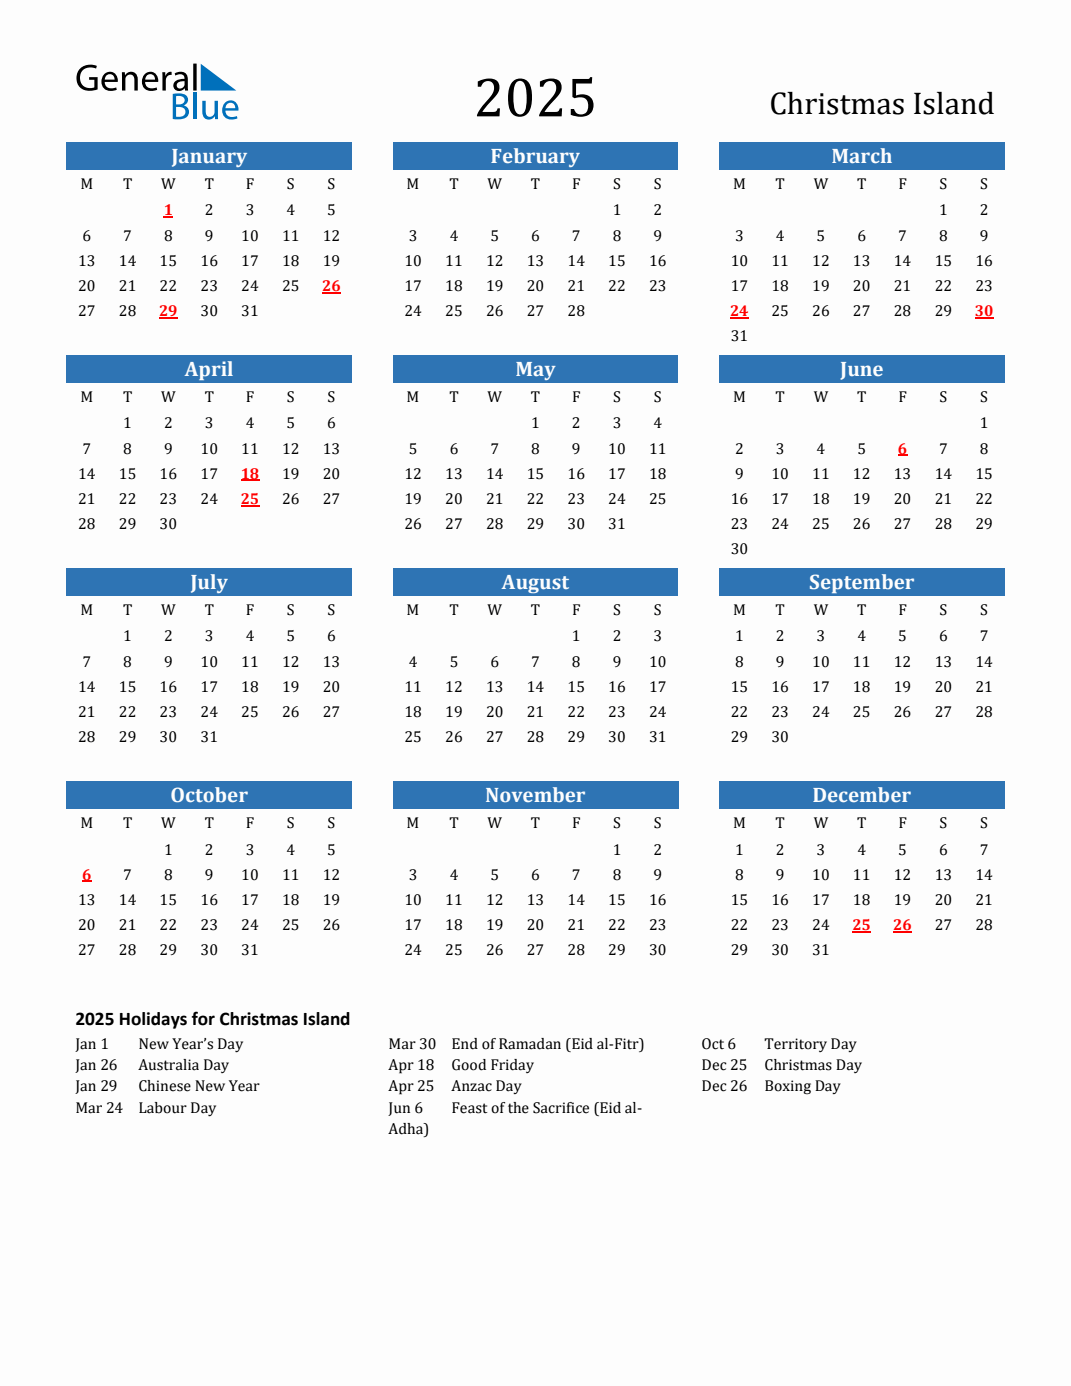 2025-holiday-calendar-for-christmas-island-monday-start